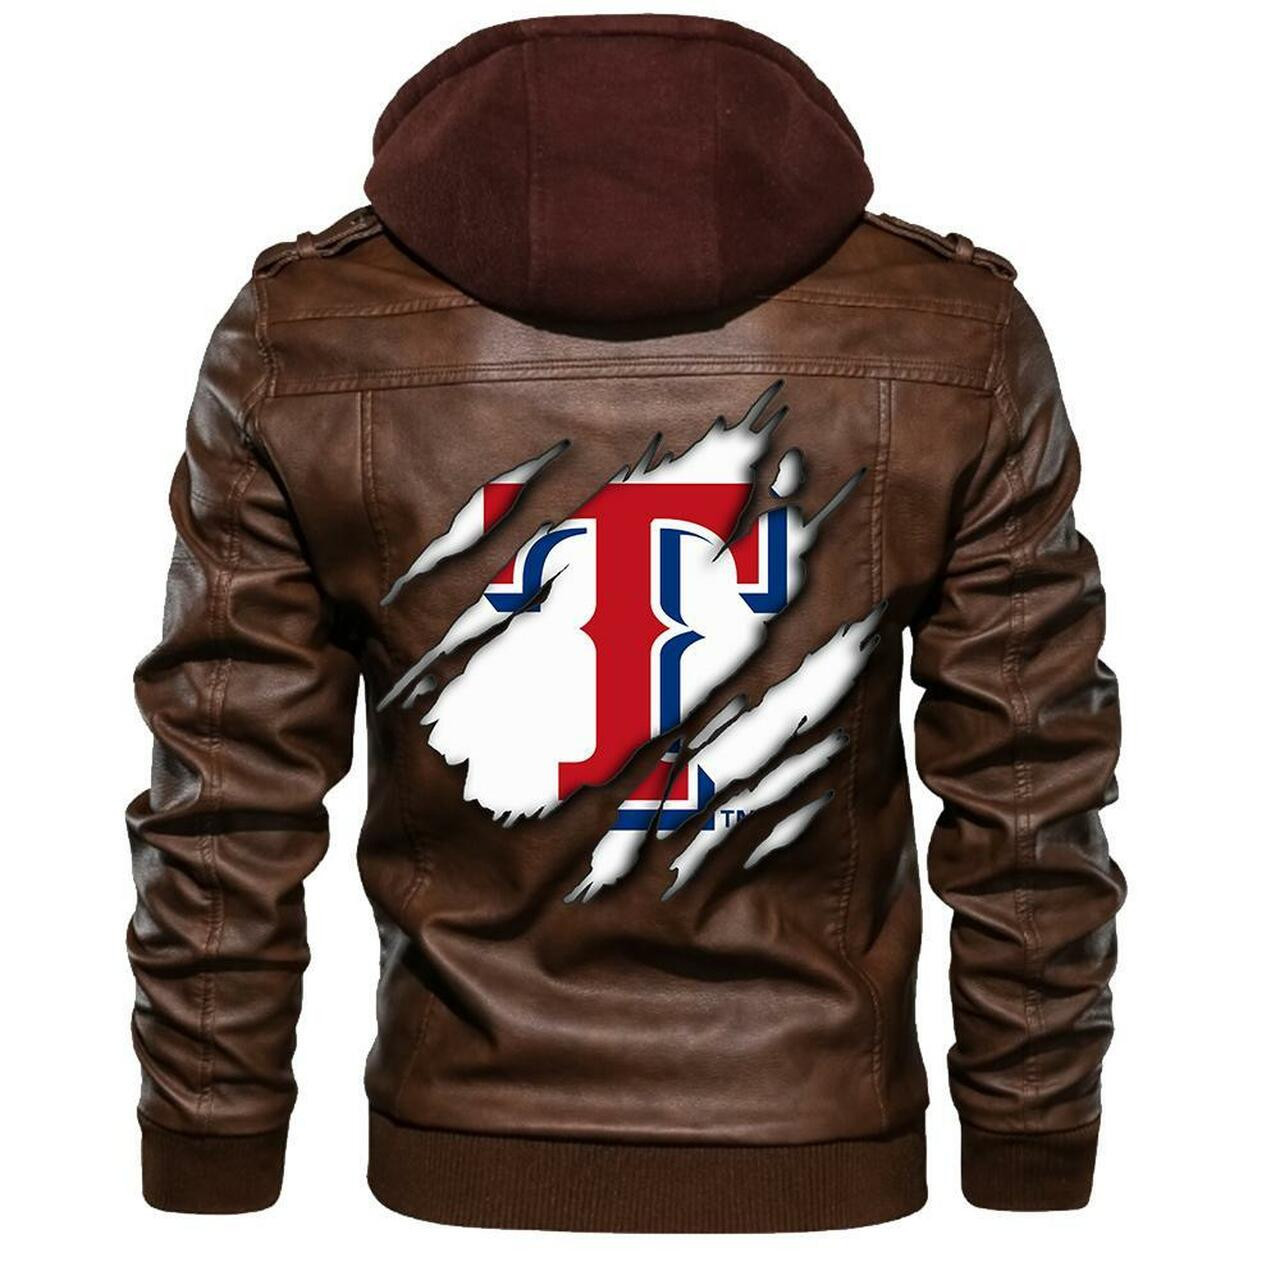 Top leather jacket Sells Best on Techcomshop 156